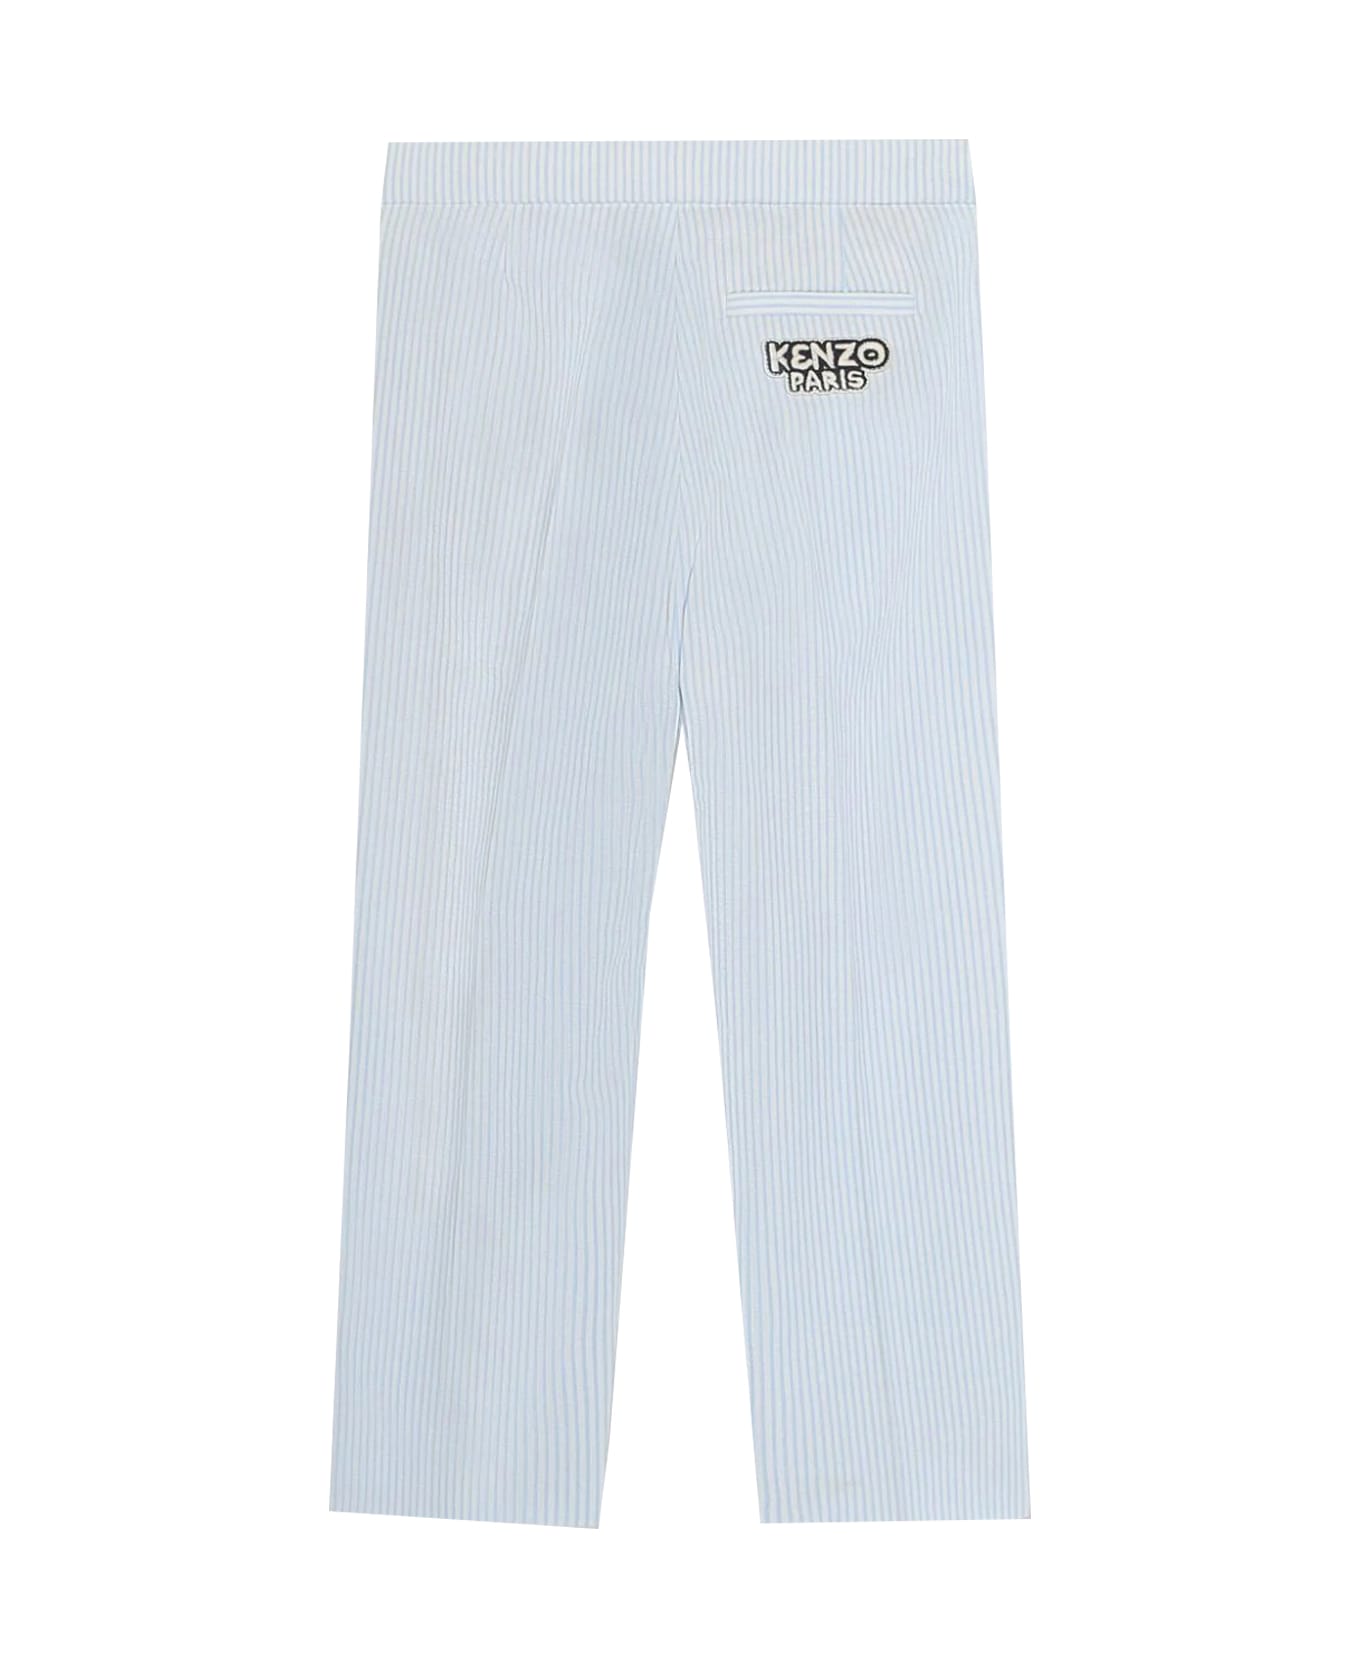 Kenzo Cotton Pants - Light blue ボトムス